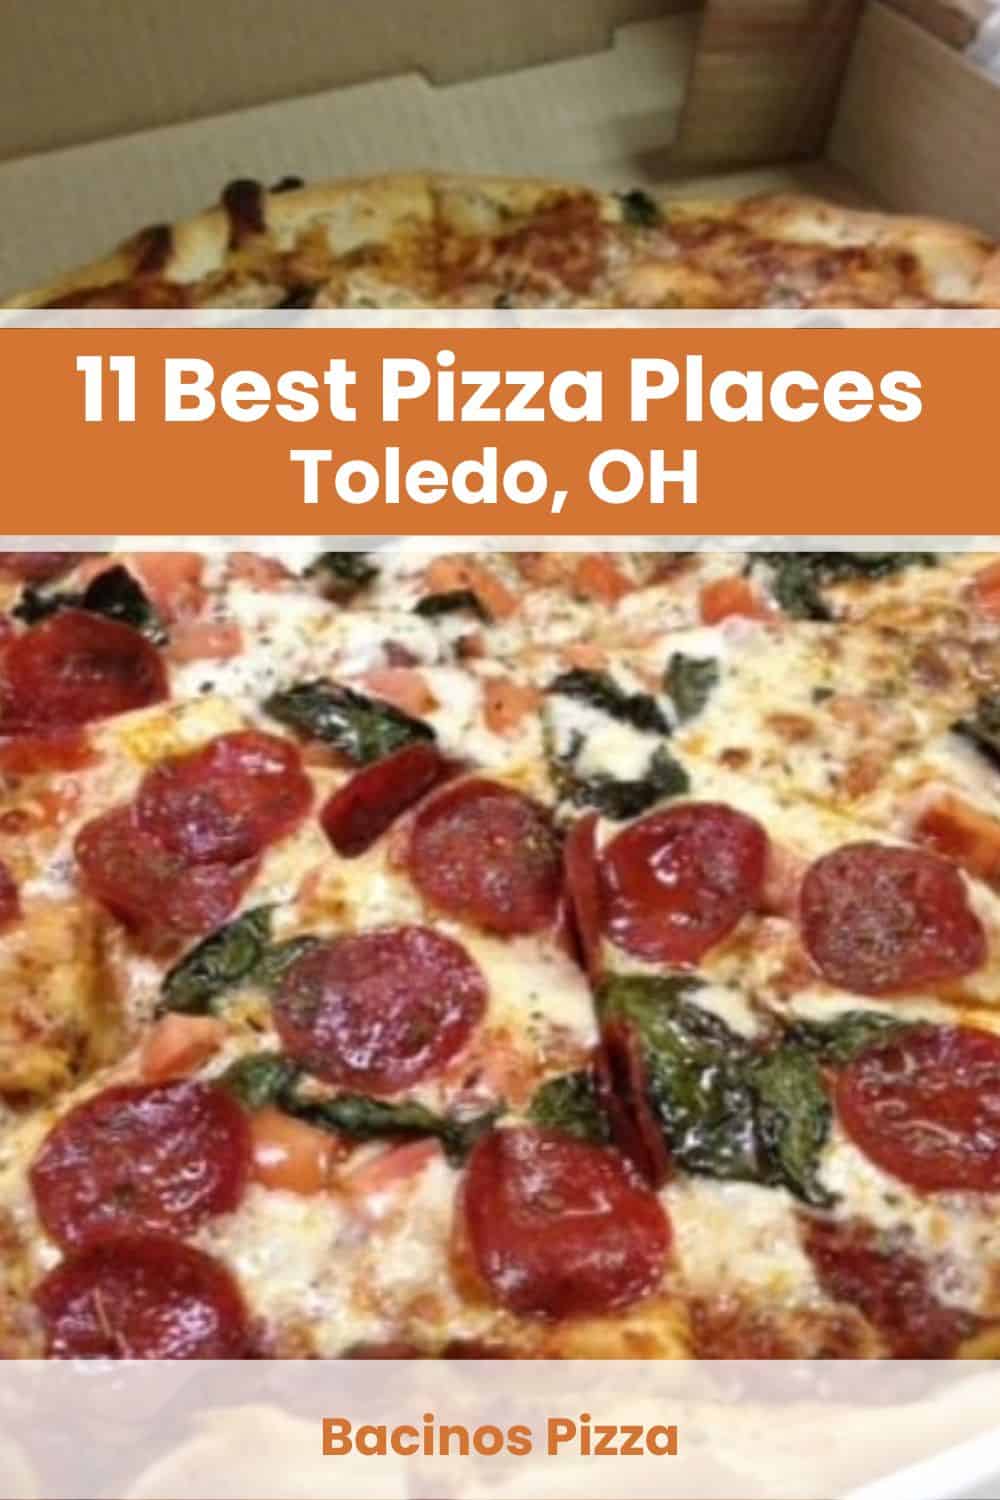 Best Pizza Places in Toledo